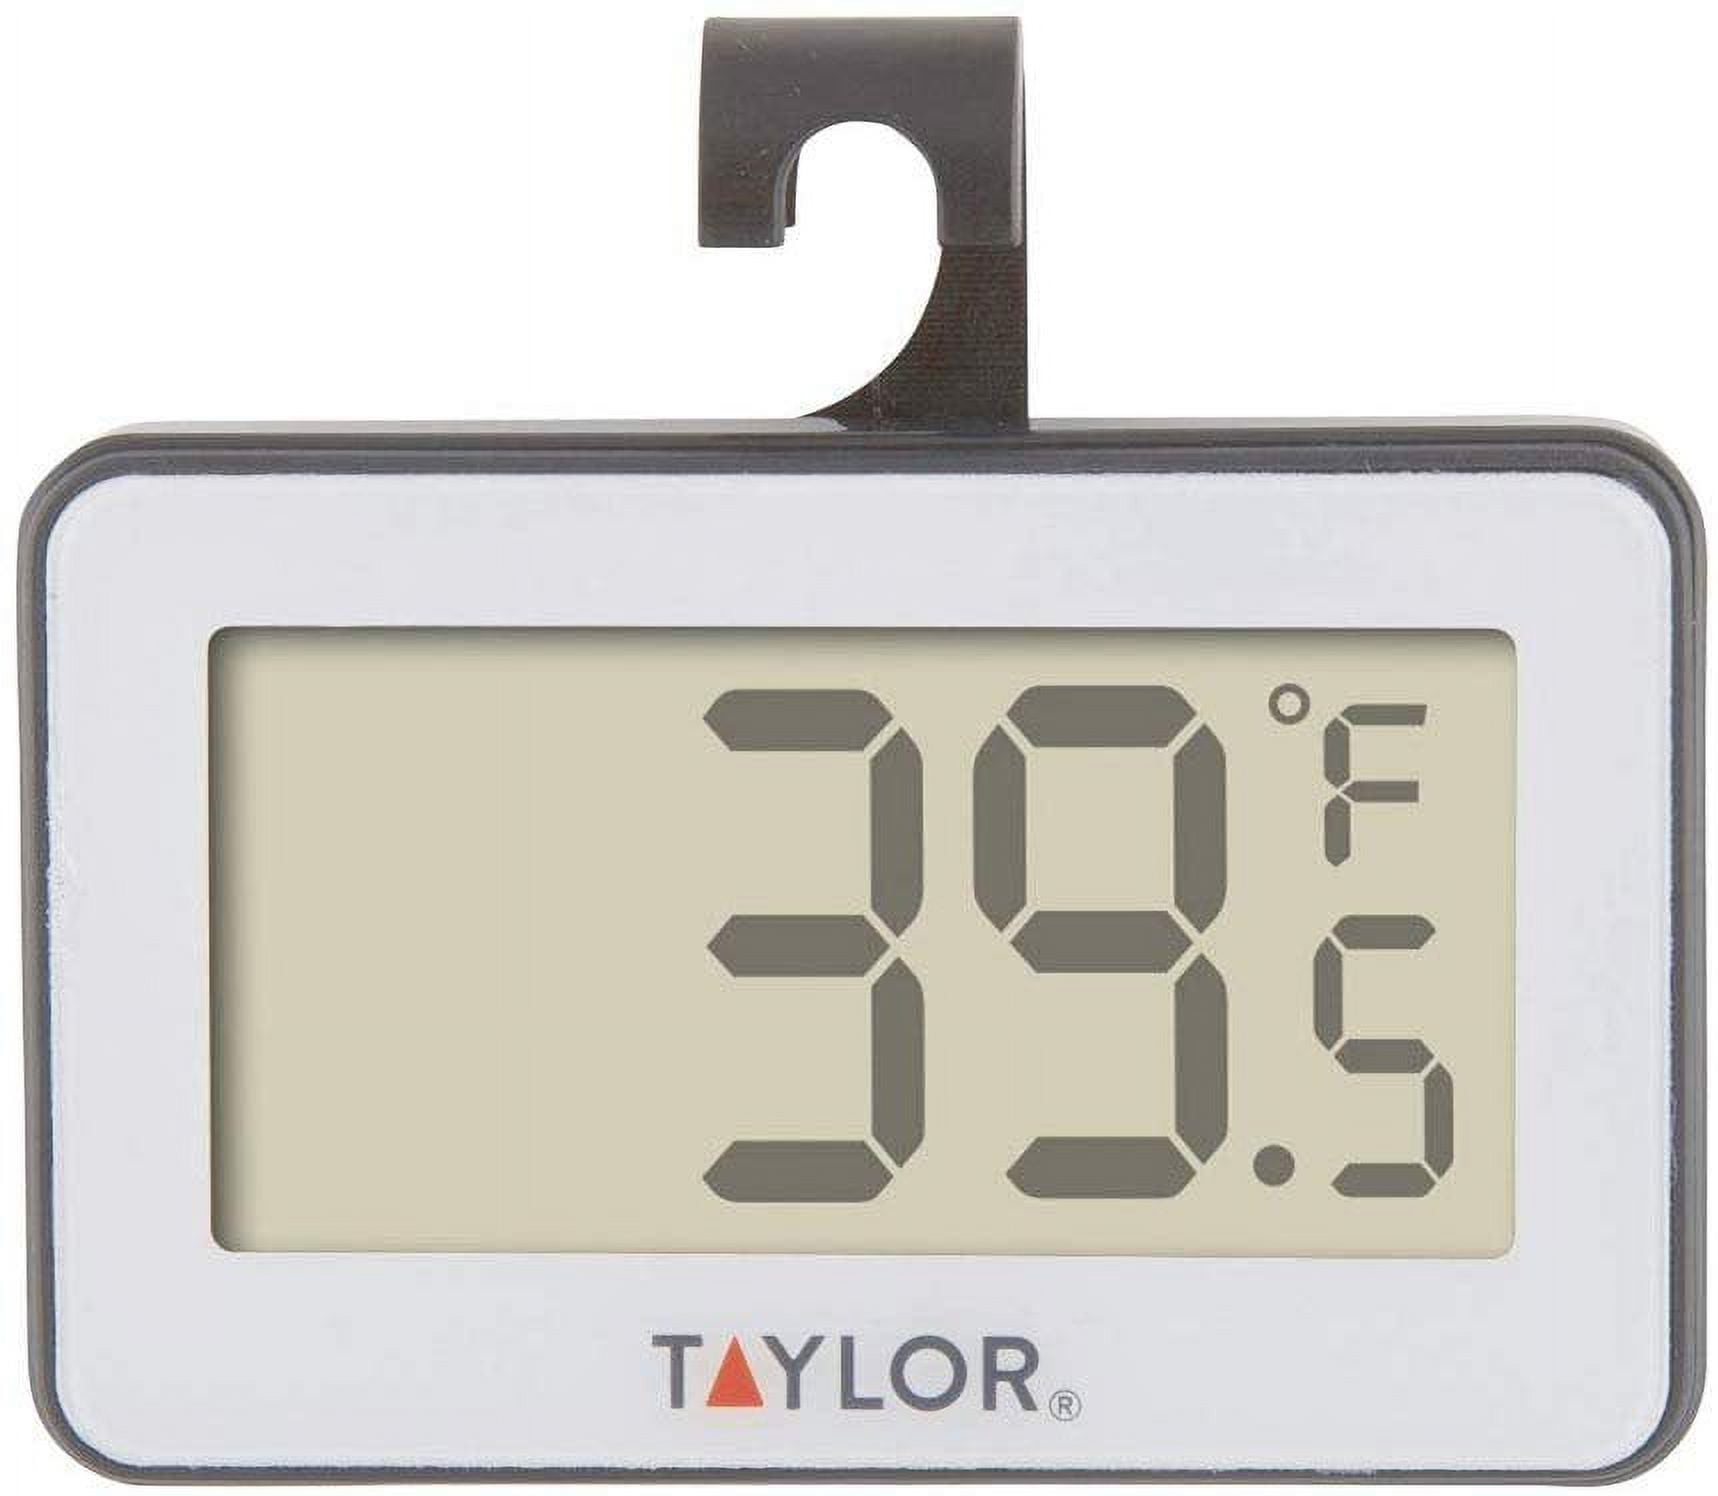 Taylor Refridgerator & Freezer Thermometer Made in USA VTG 1950's